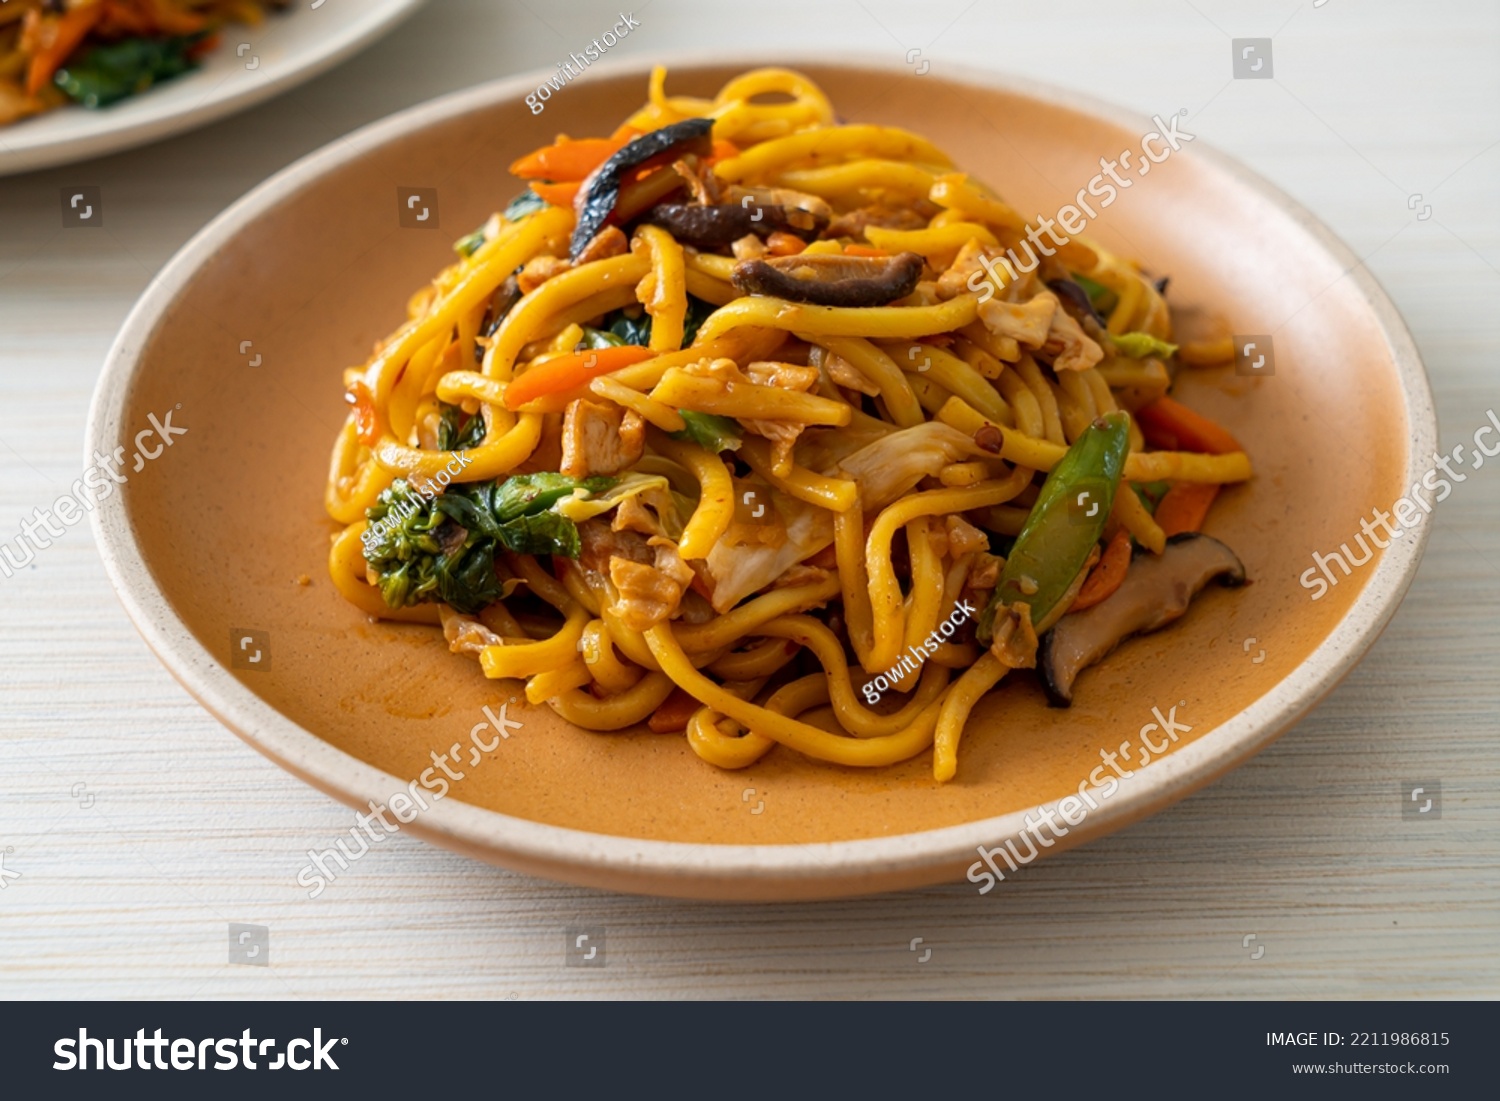 stir-fried yakisoba noodles with vegetable in vegan style - Vegan and vegetarian food style #2211986815